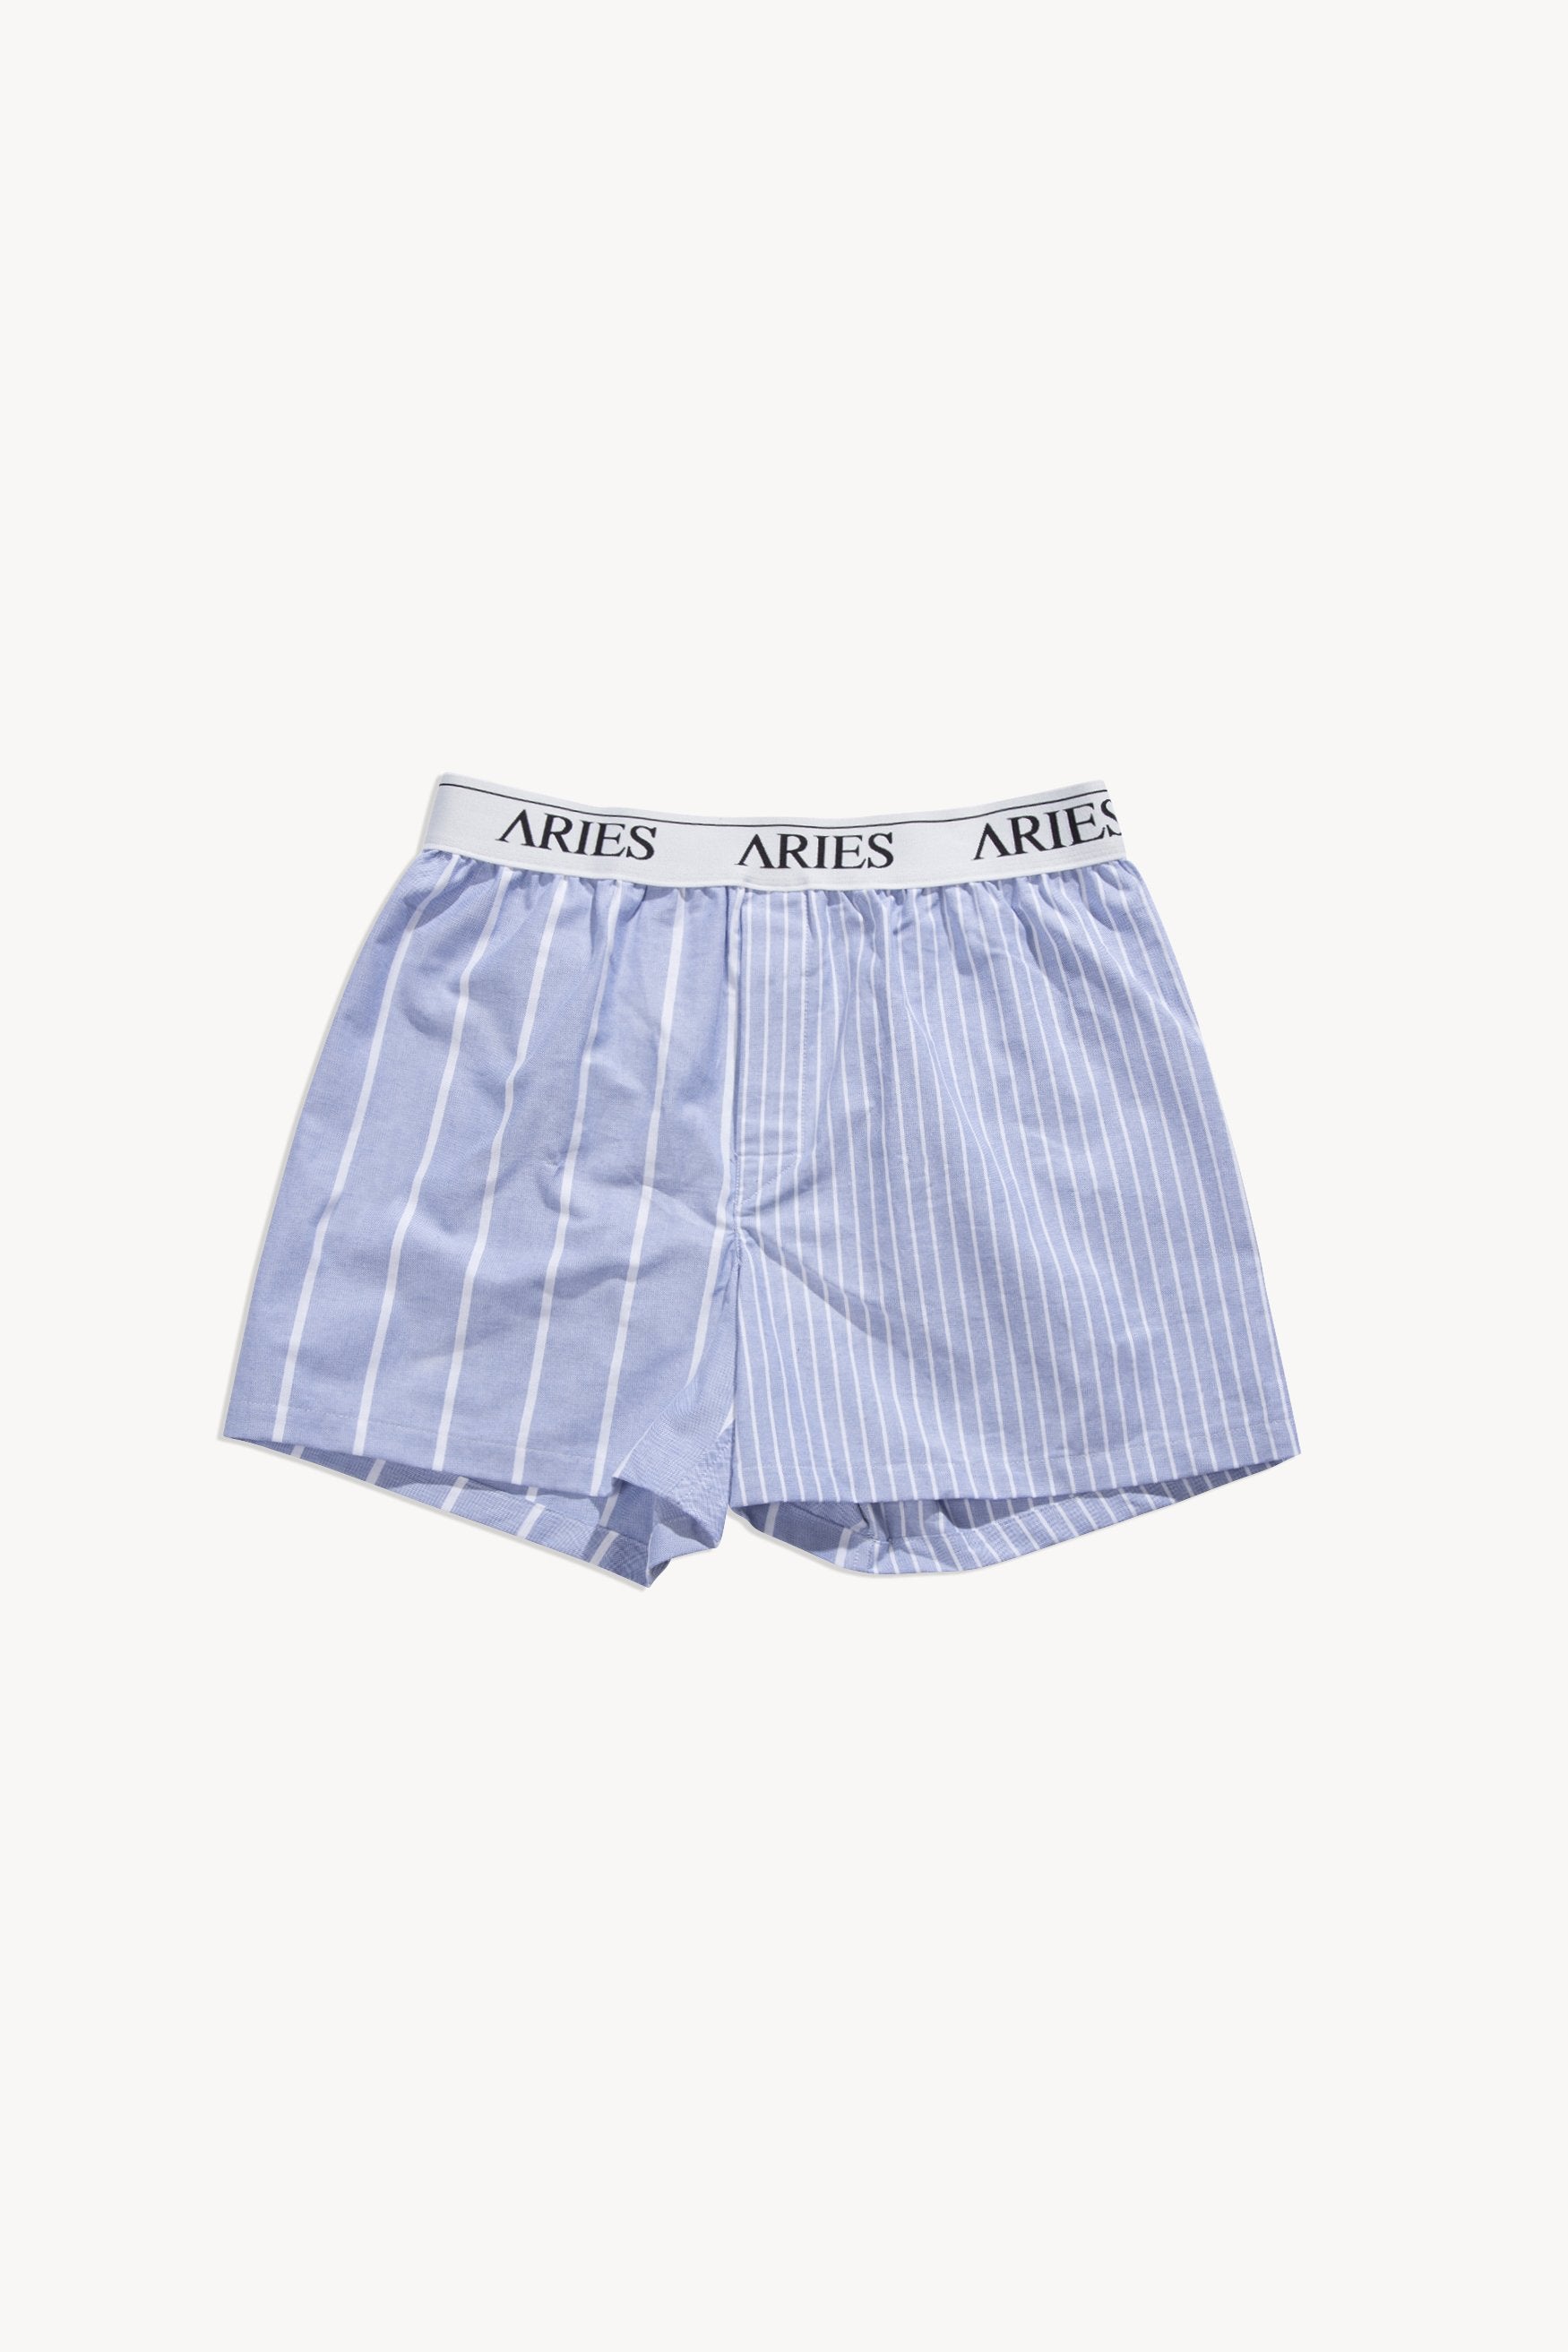 Aries + Boxer Shorts Stripes